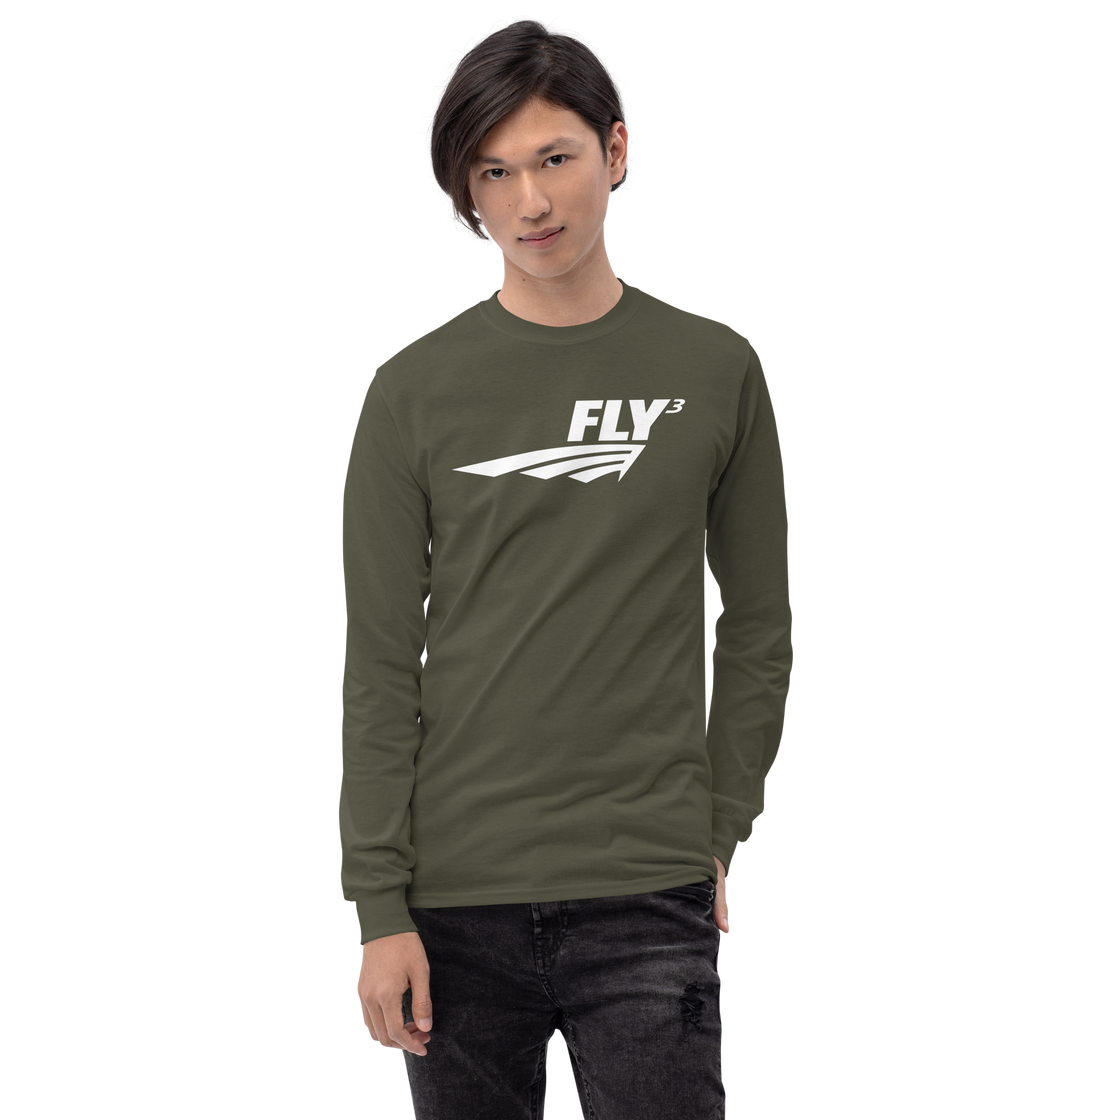 FLY³ Men’s Long Sleeve Shirt | Flycube